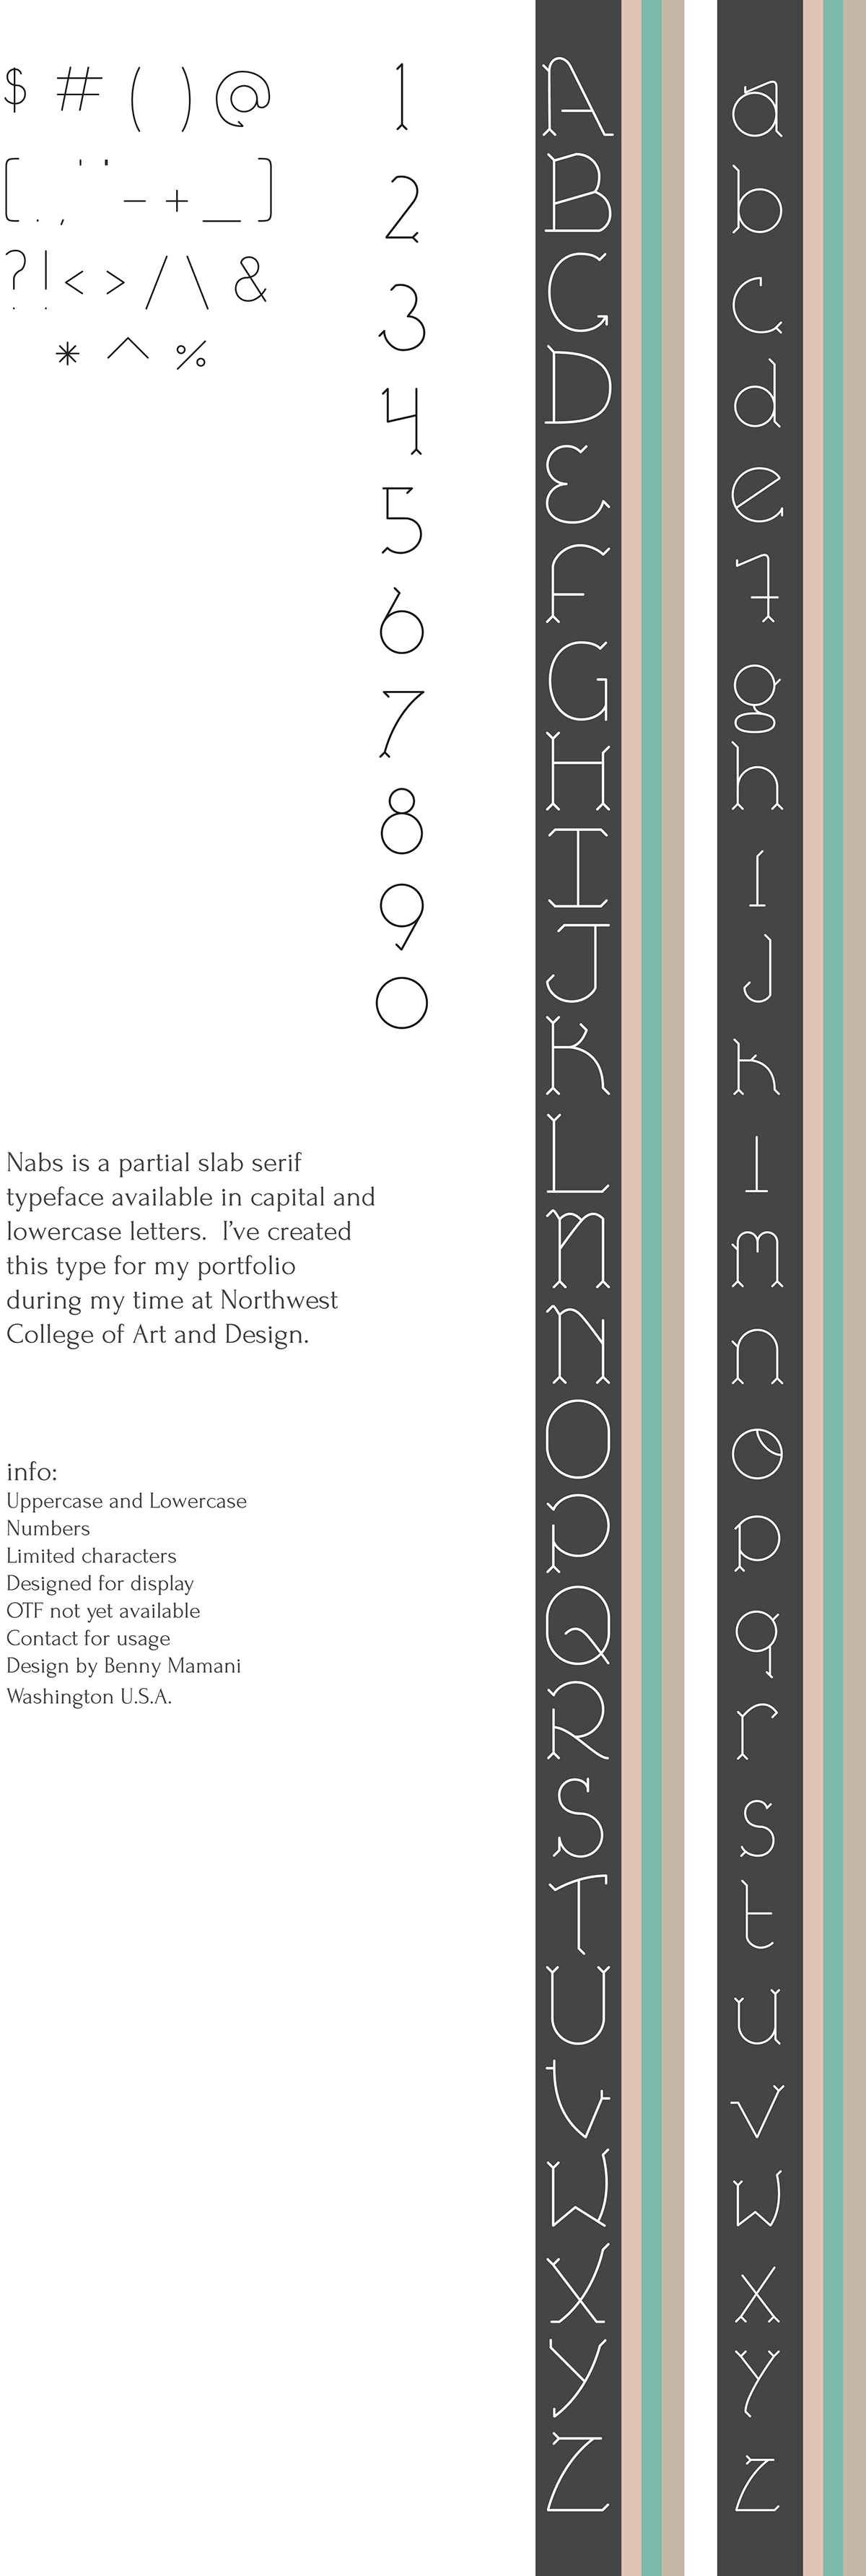 NABS  typography type Typeface decorative display type